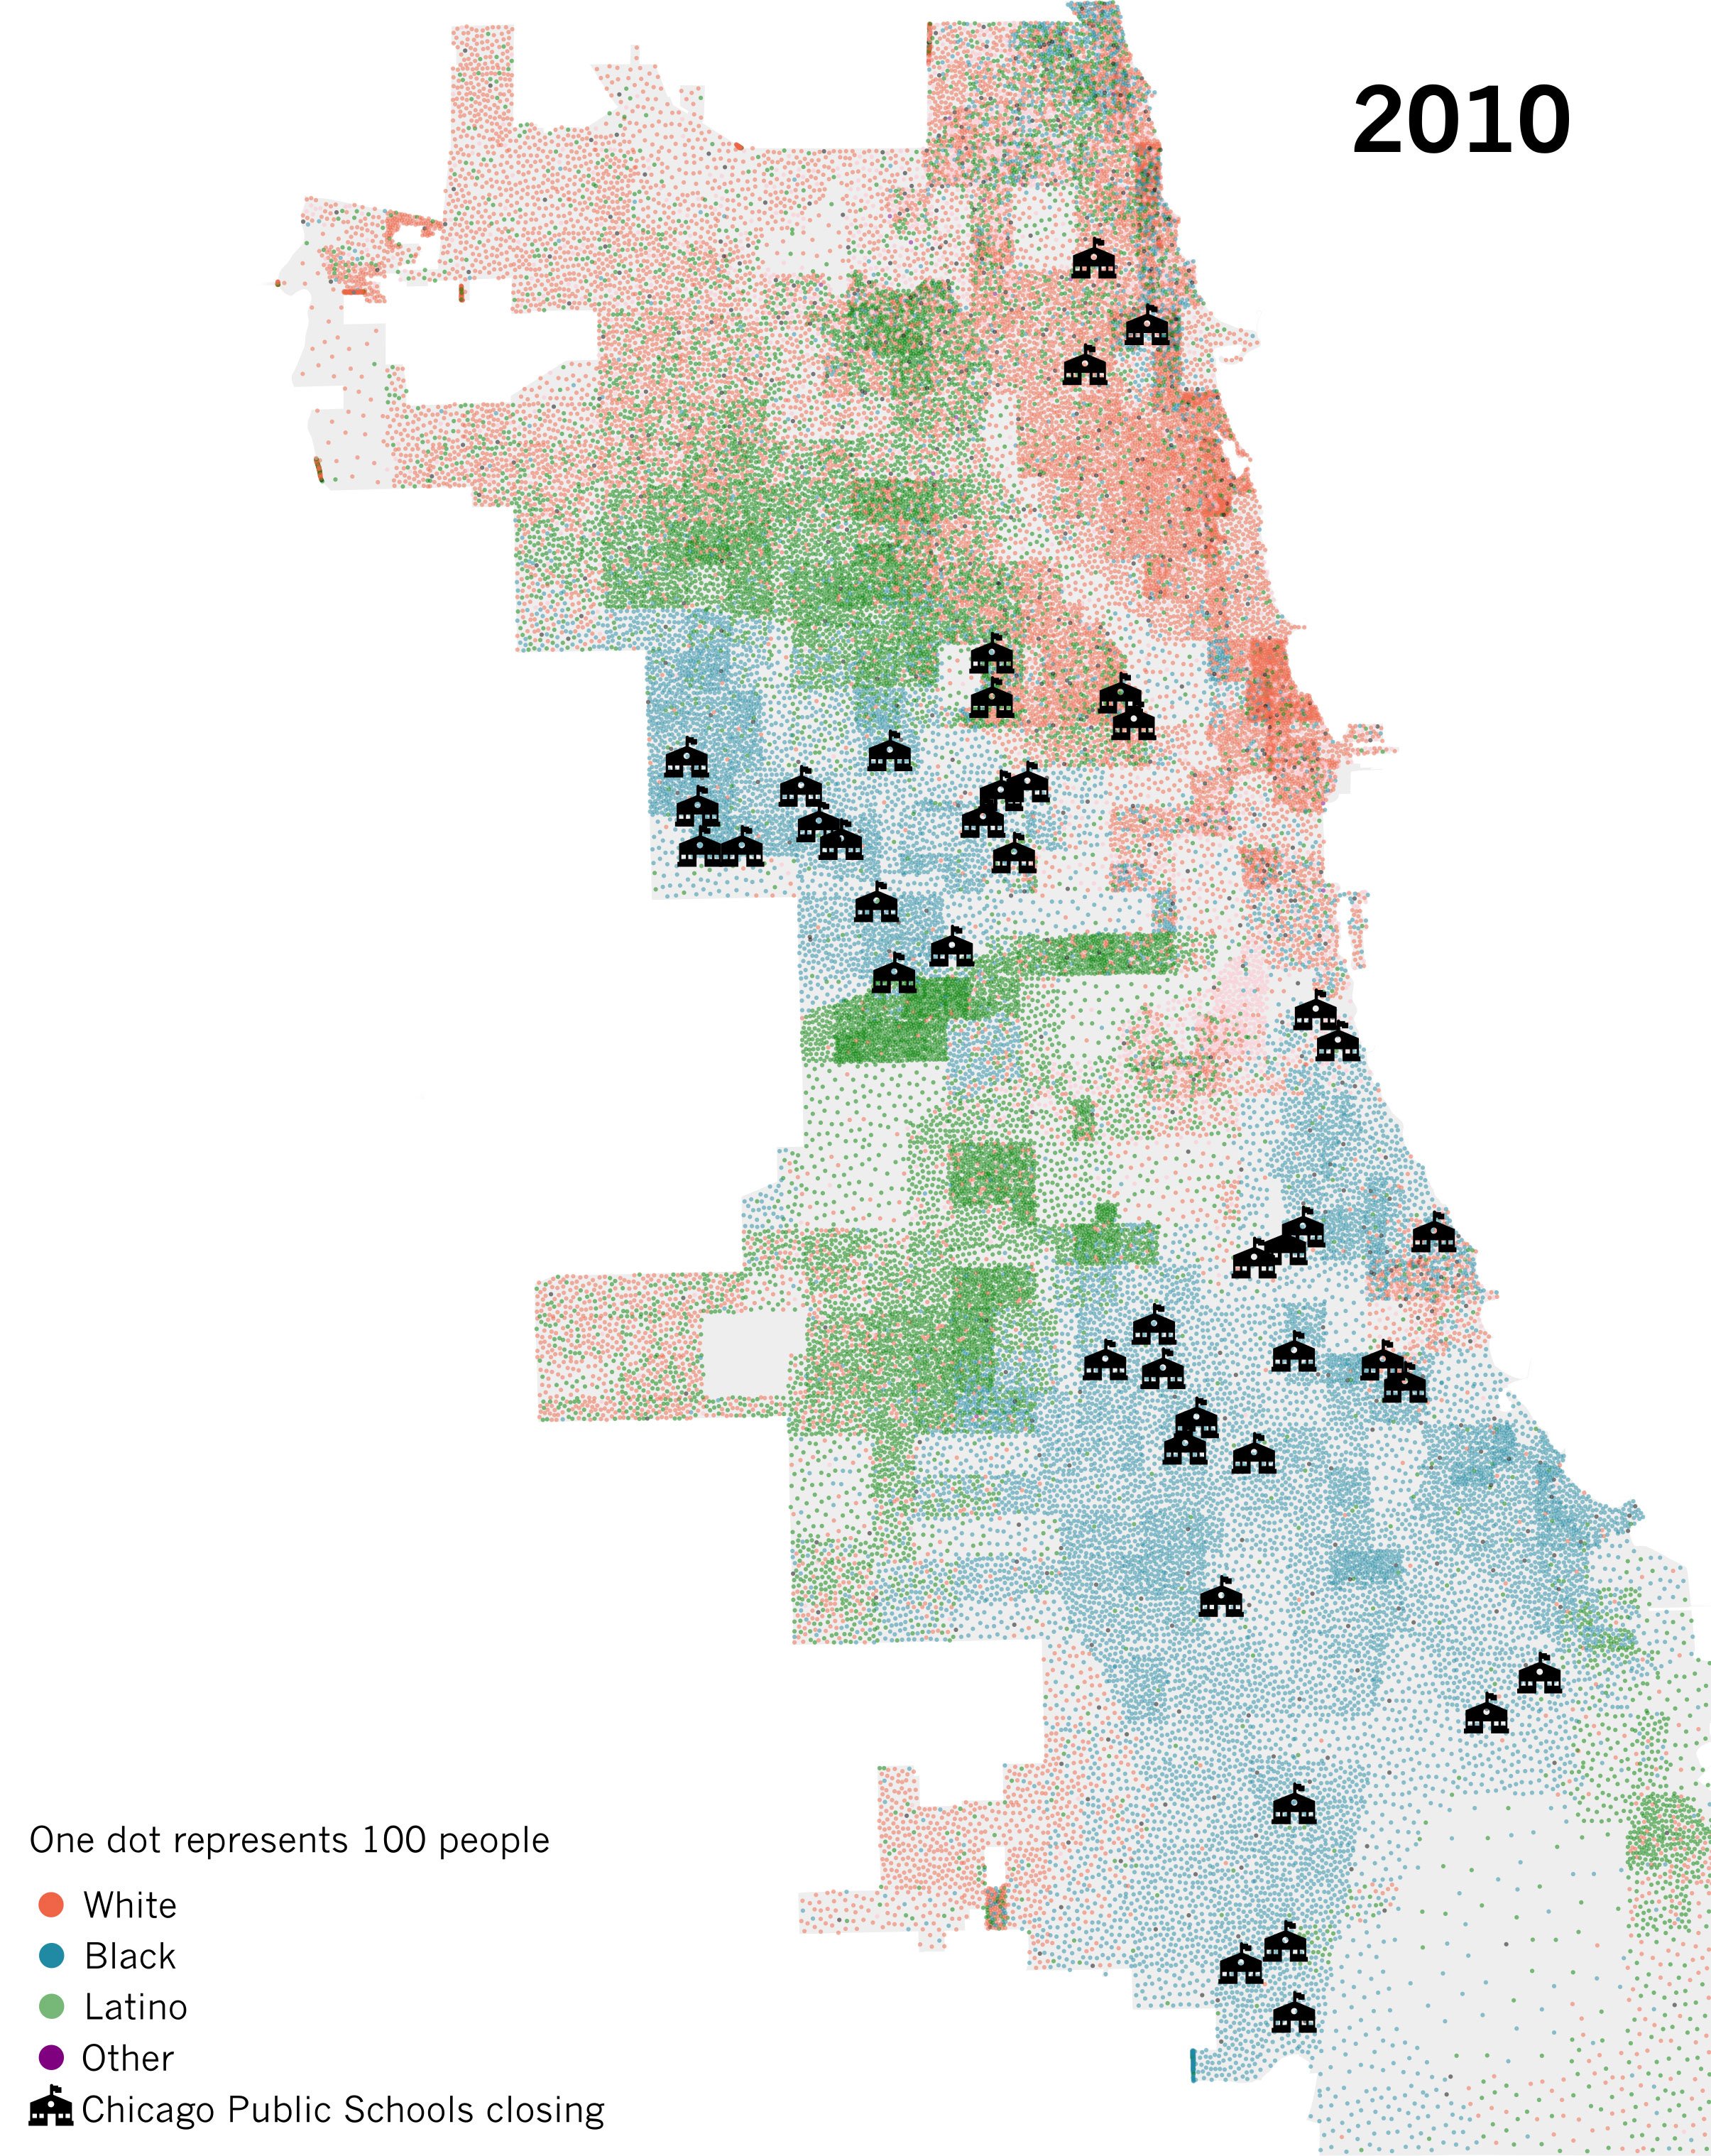 segregation-2010-map-01-full-size_01.jpg